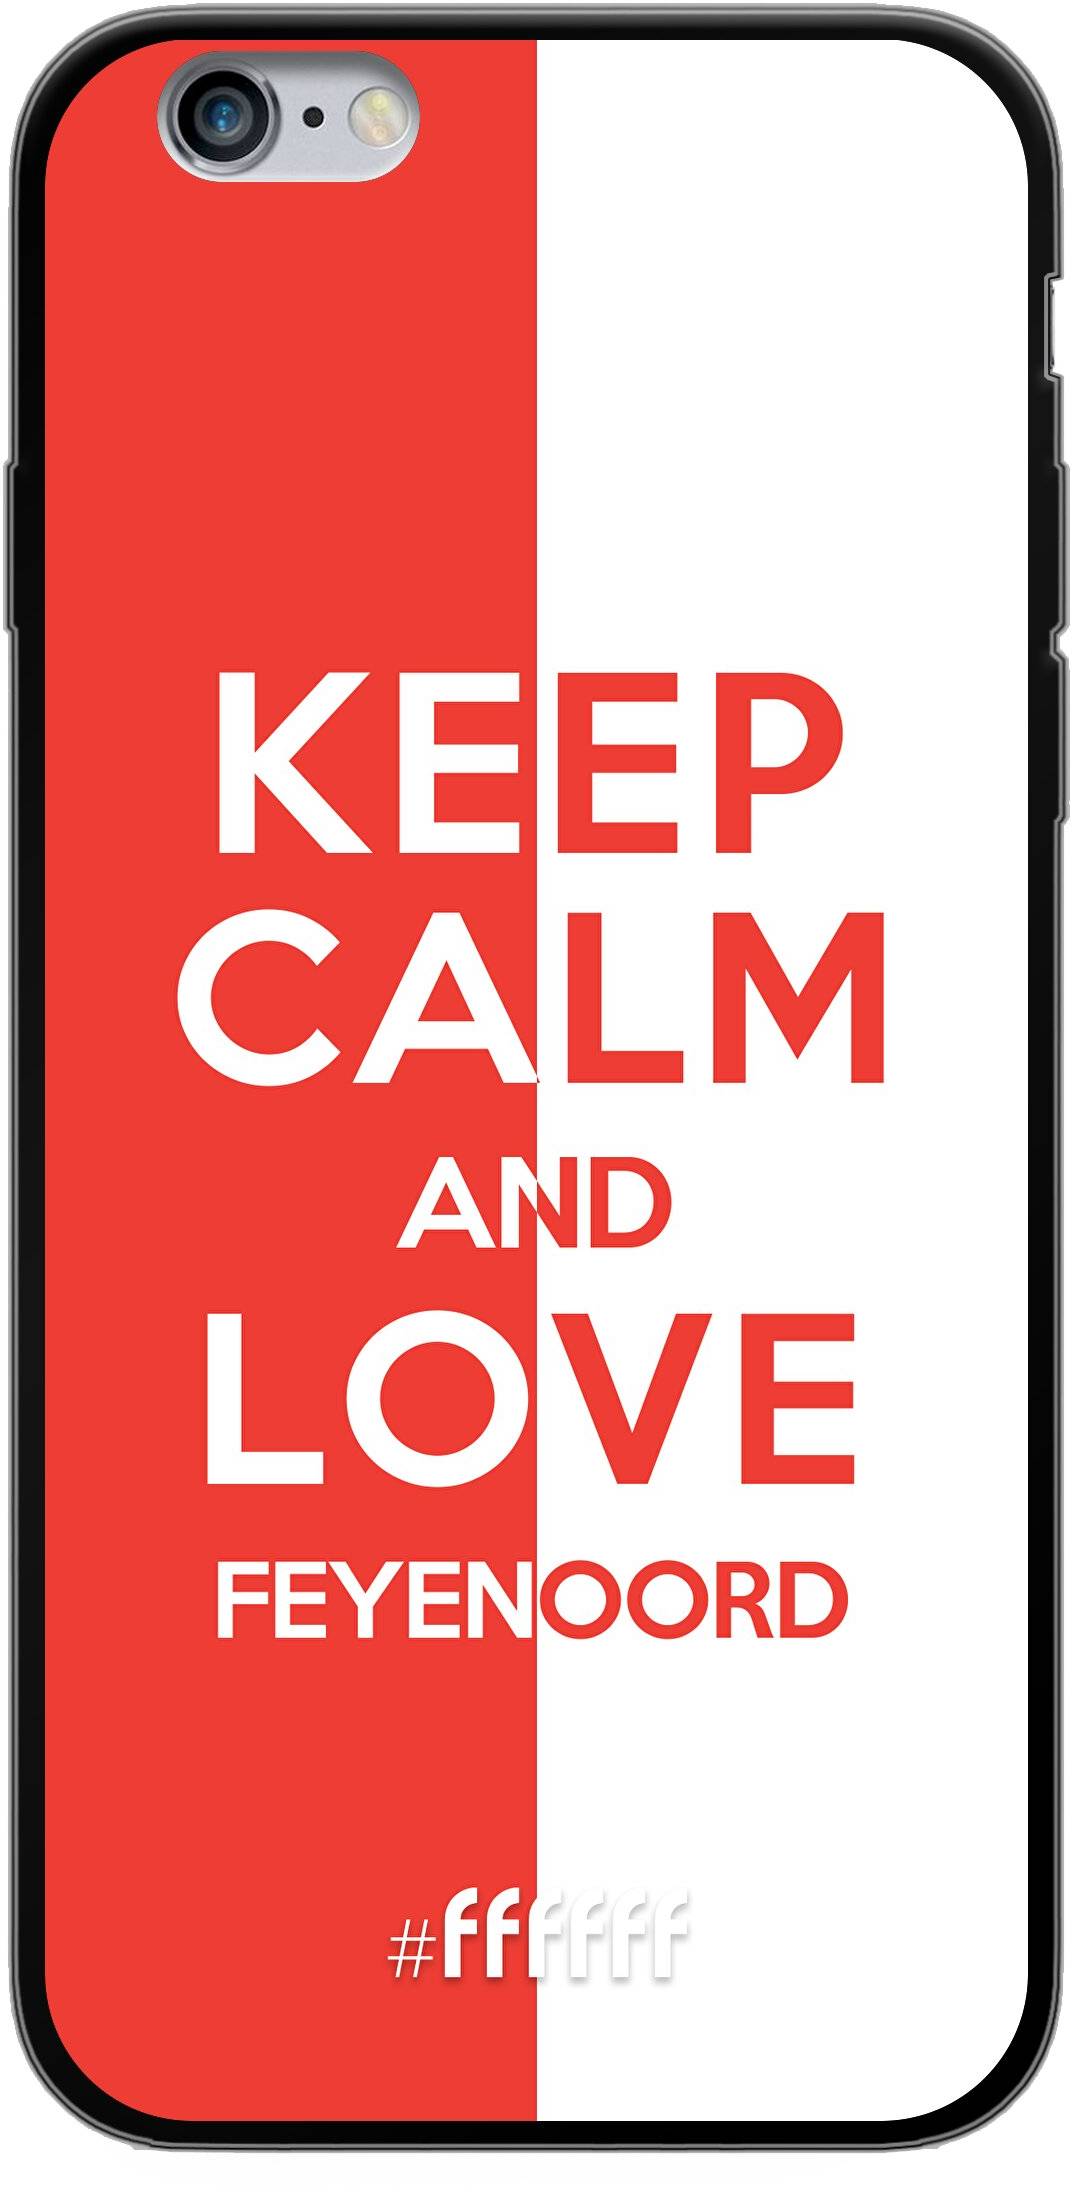 Feyenoord - Keep calm iPhone 6